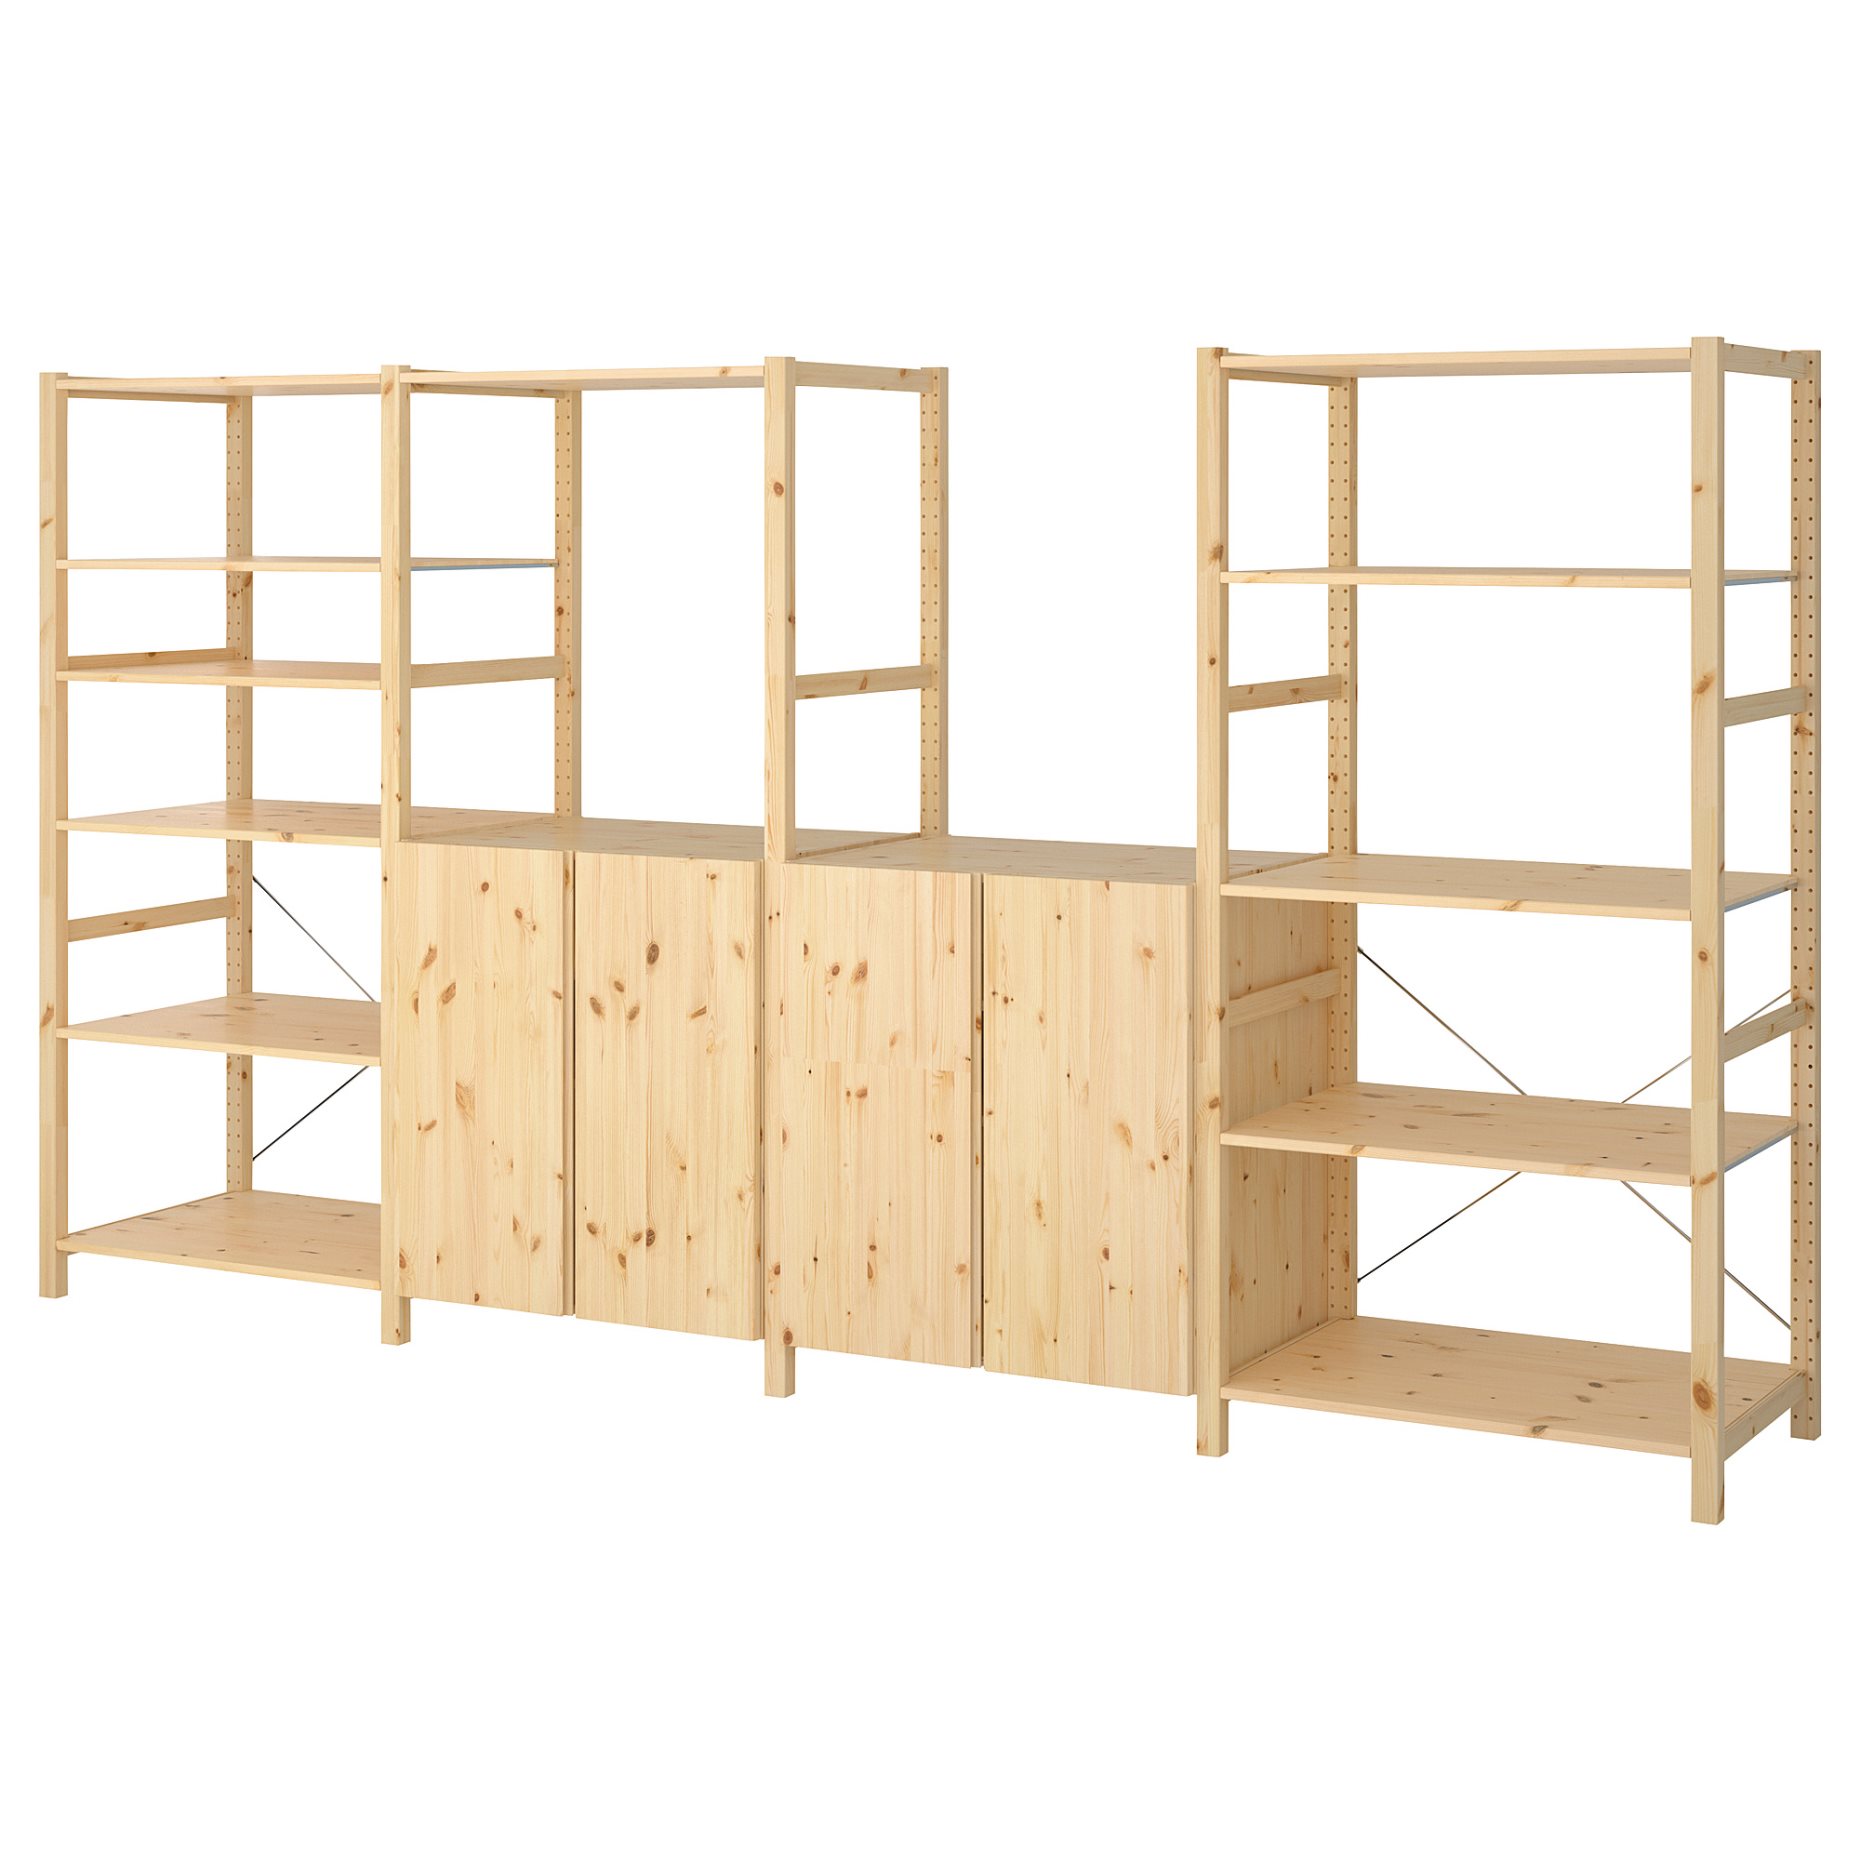 IVAR, 4 sections/shelves, 344x50x179 cm, 792.485.50